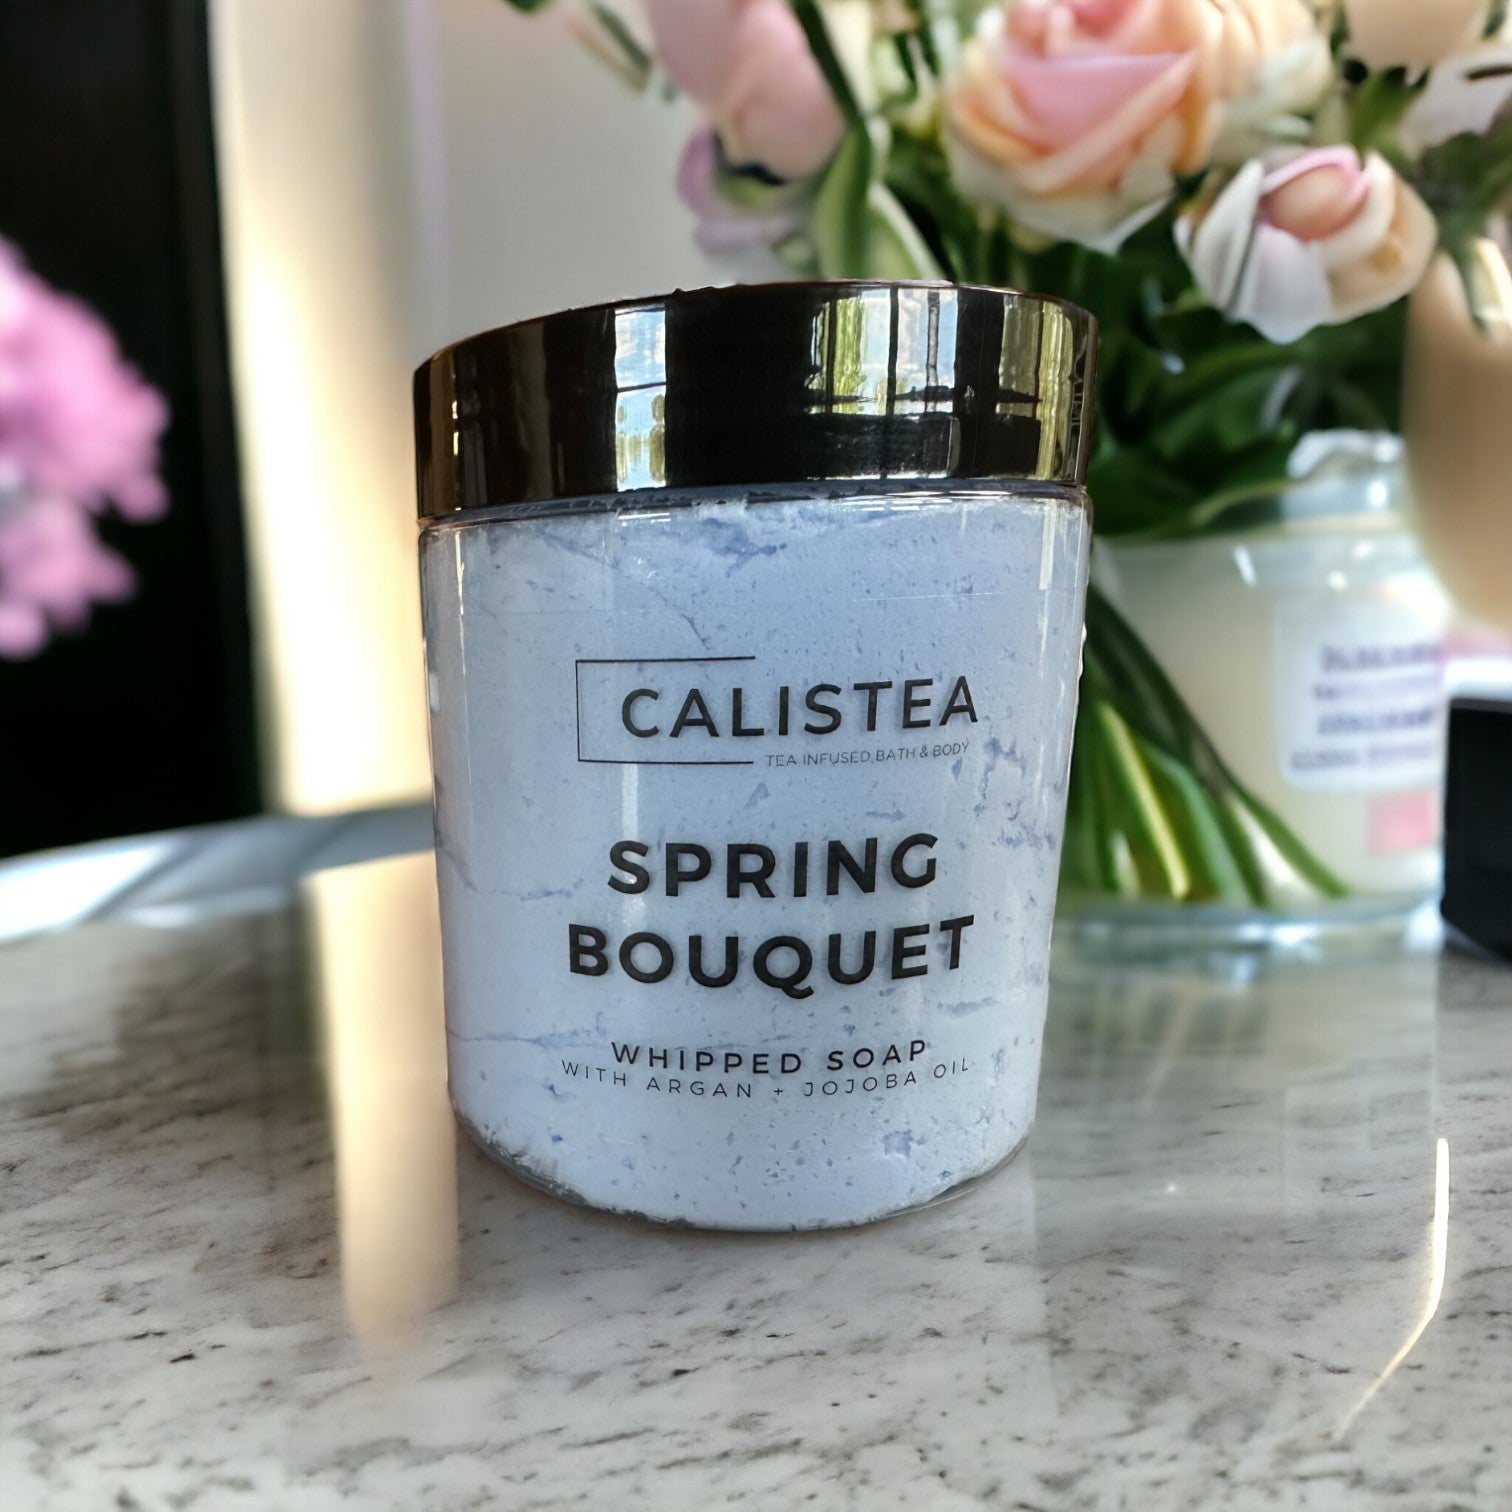 Spring Bouquet - Calistea4 oz by volume